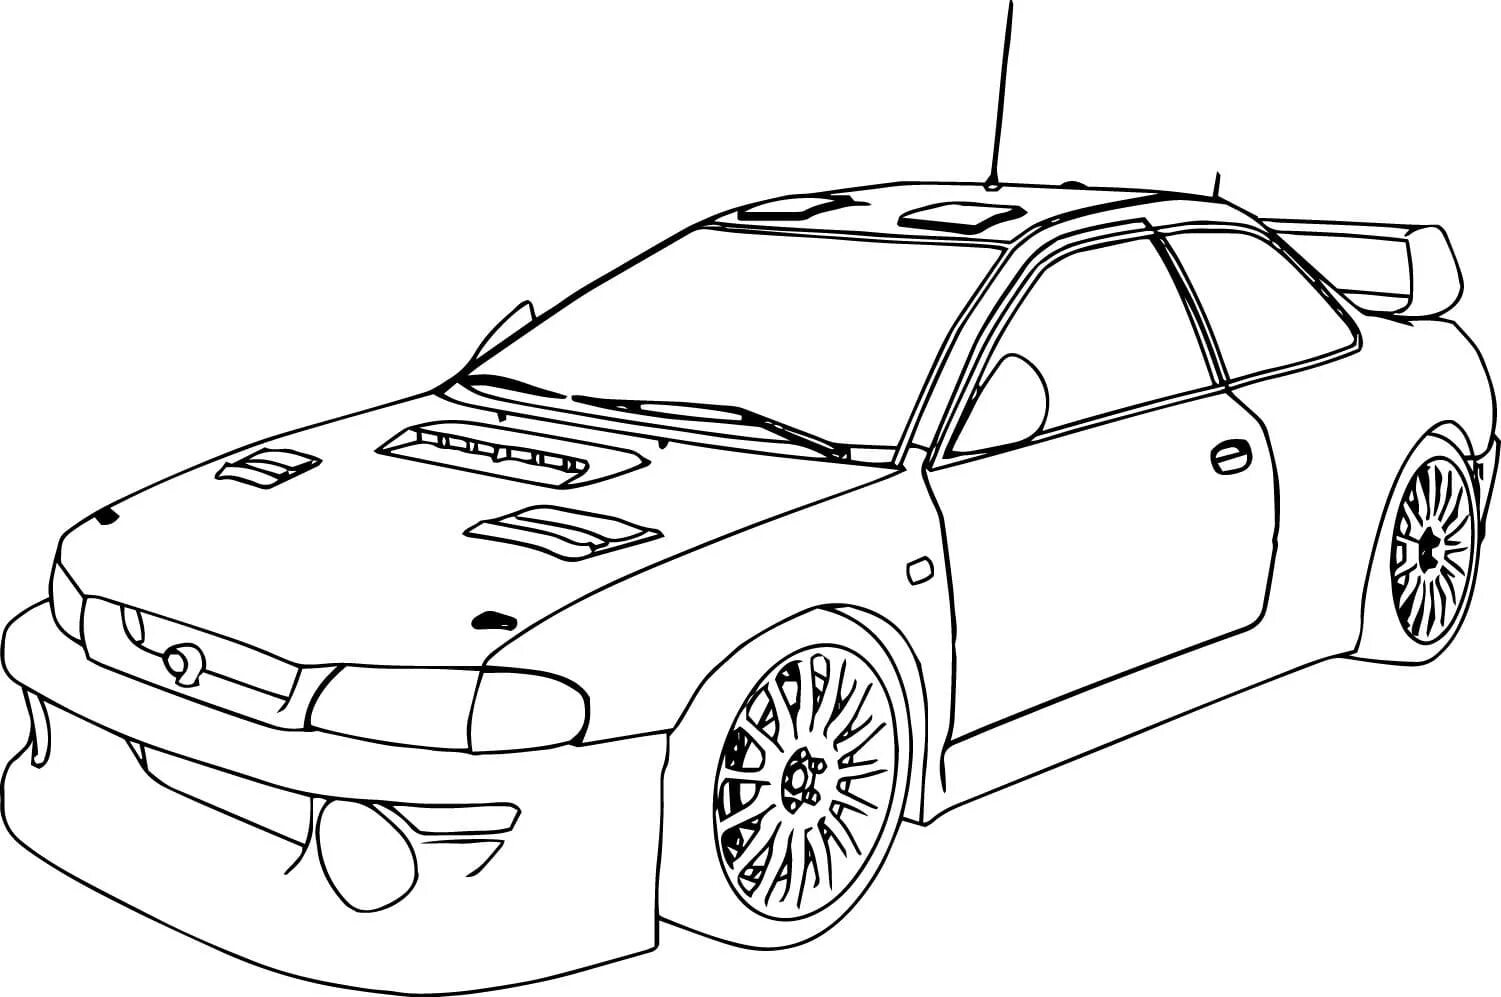 Coloring color tuning. Subaru WRX STI раскраска. Раскраска Субару Импреза. Раскраска Subaru Impreza WRX STI. Субару WRX STI раскраска.